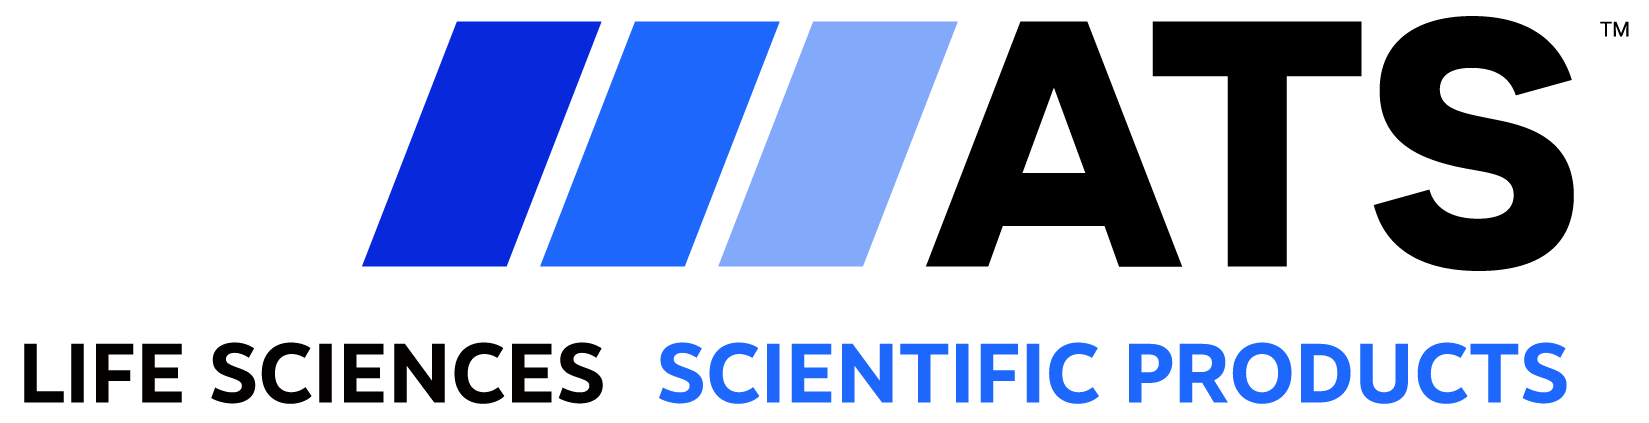 ATS Life Sciences Scientific Products